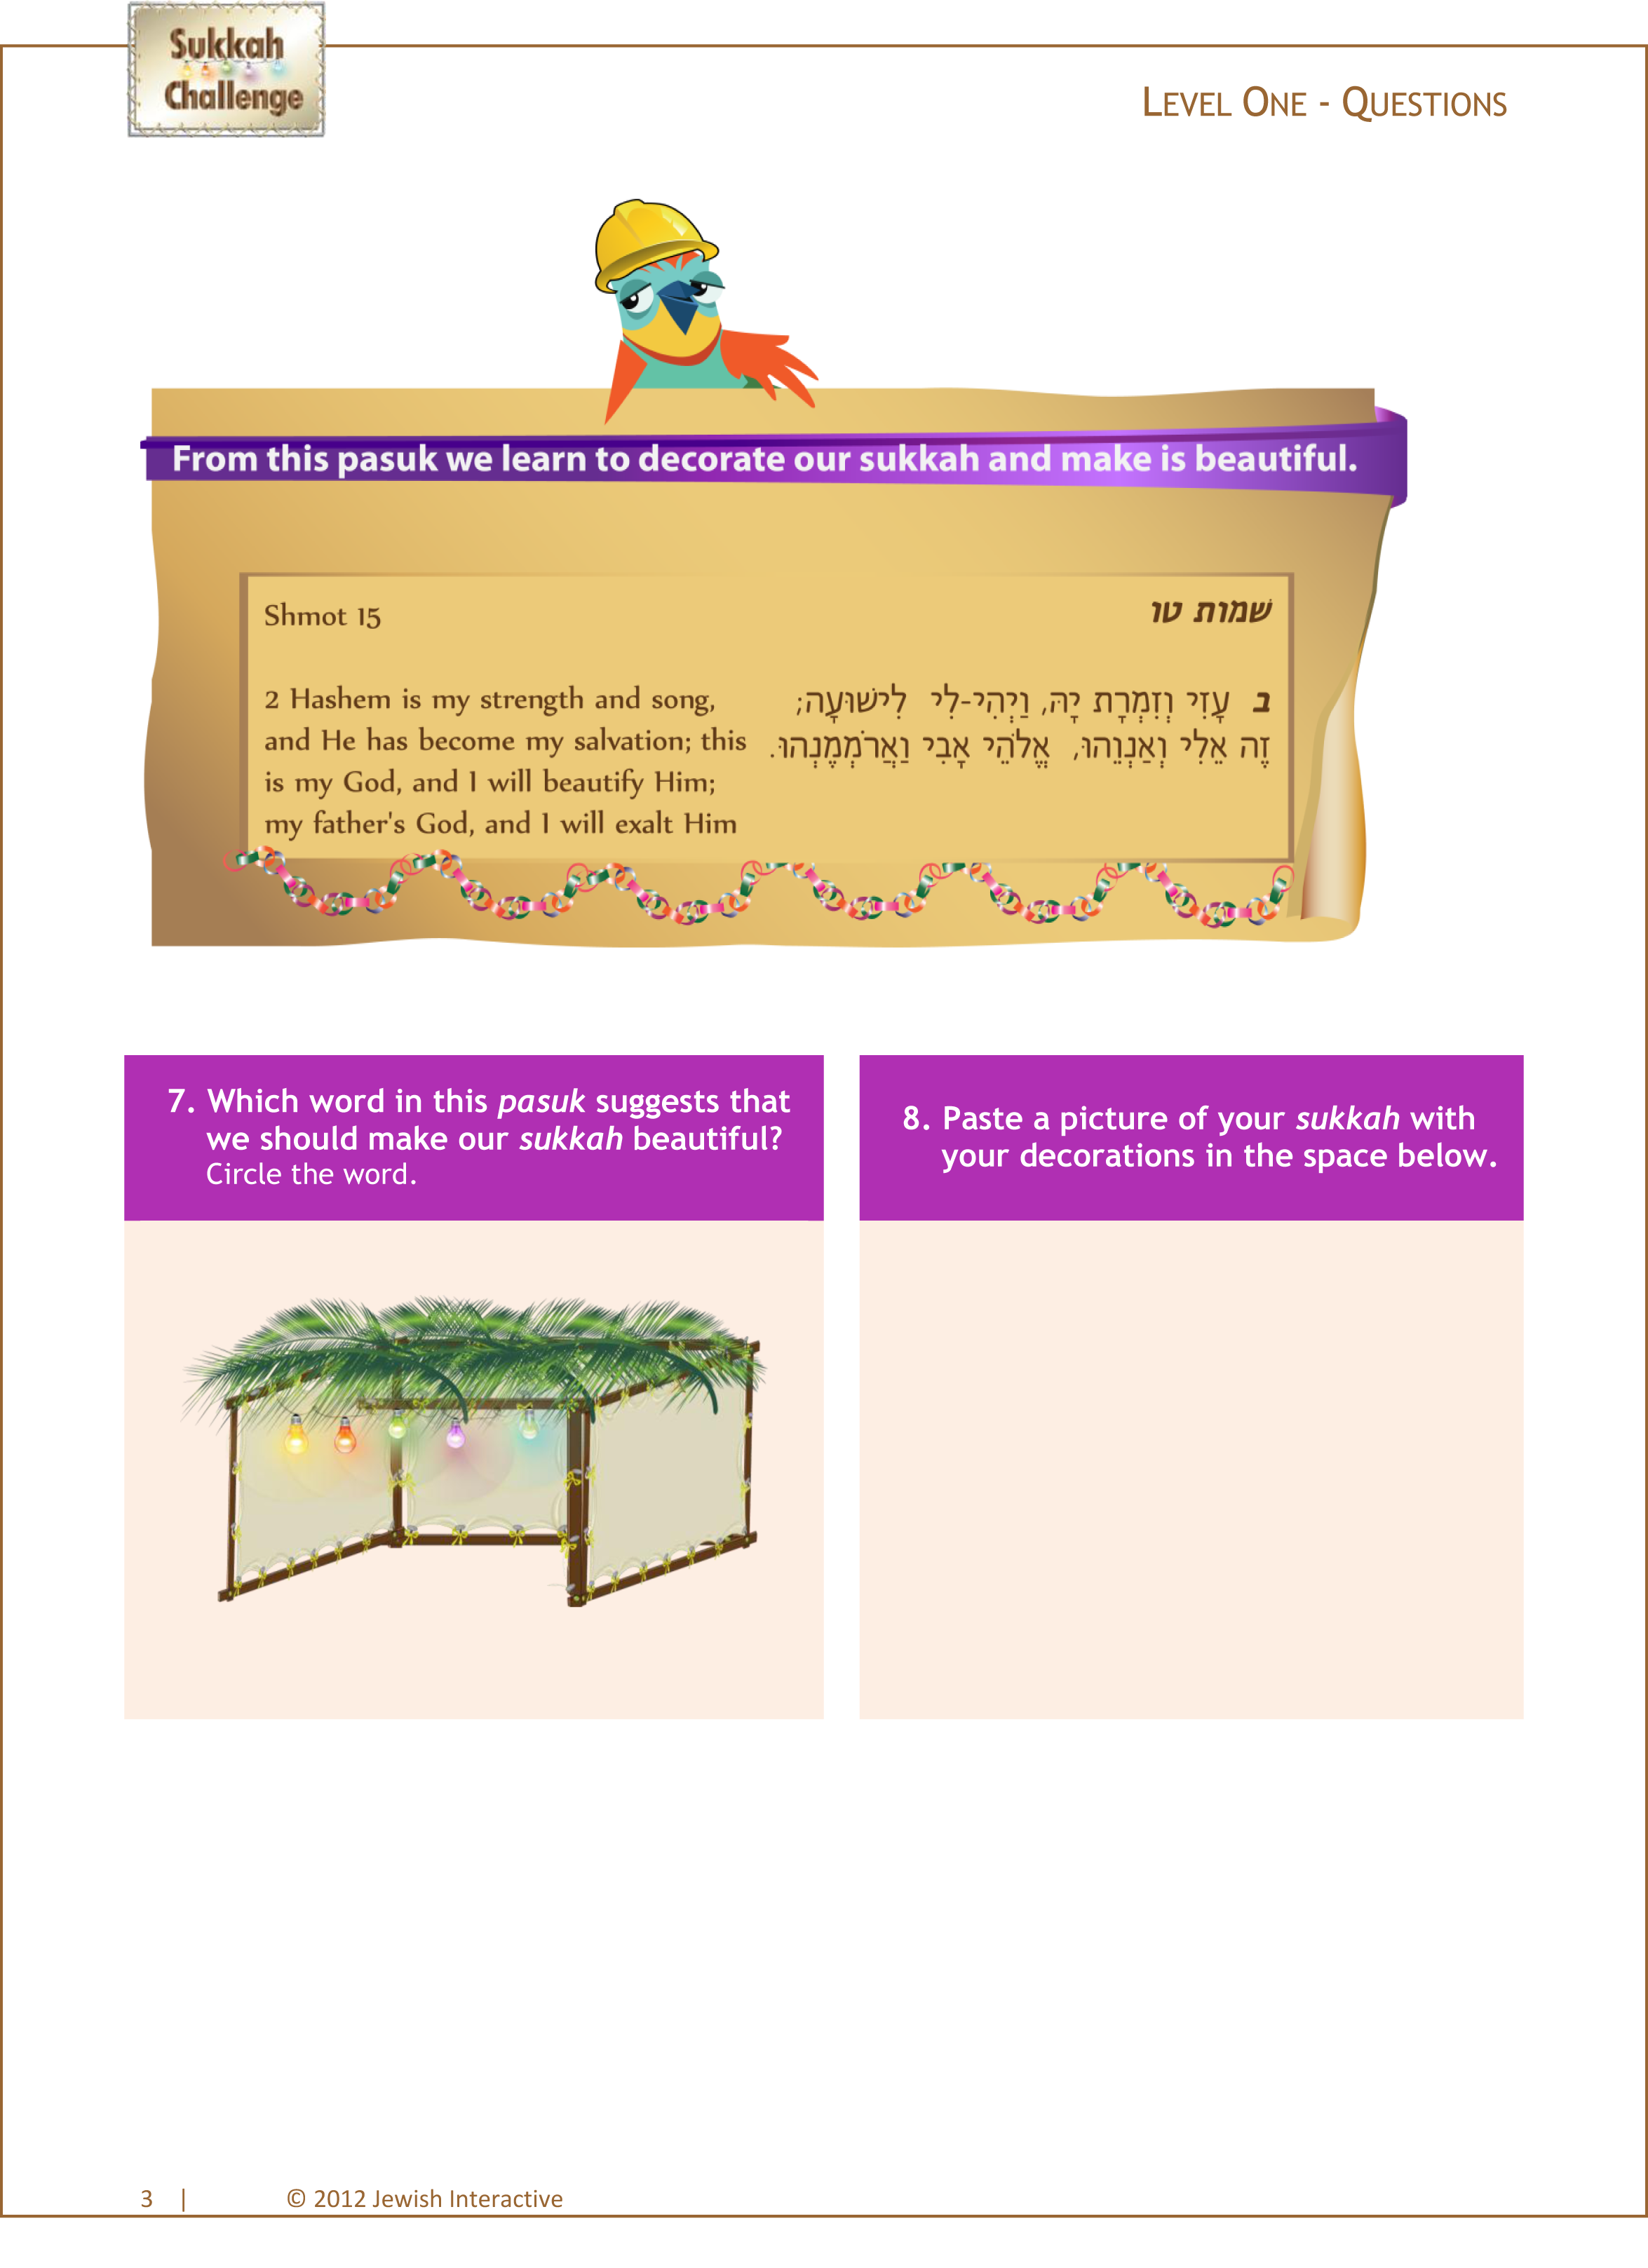 Worksheet - Sukkah - Page 3